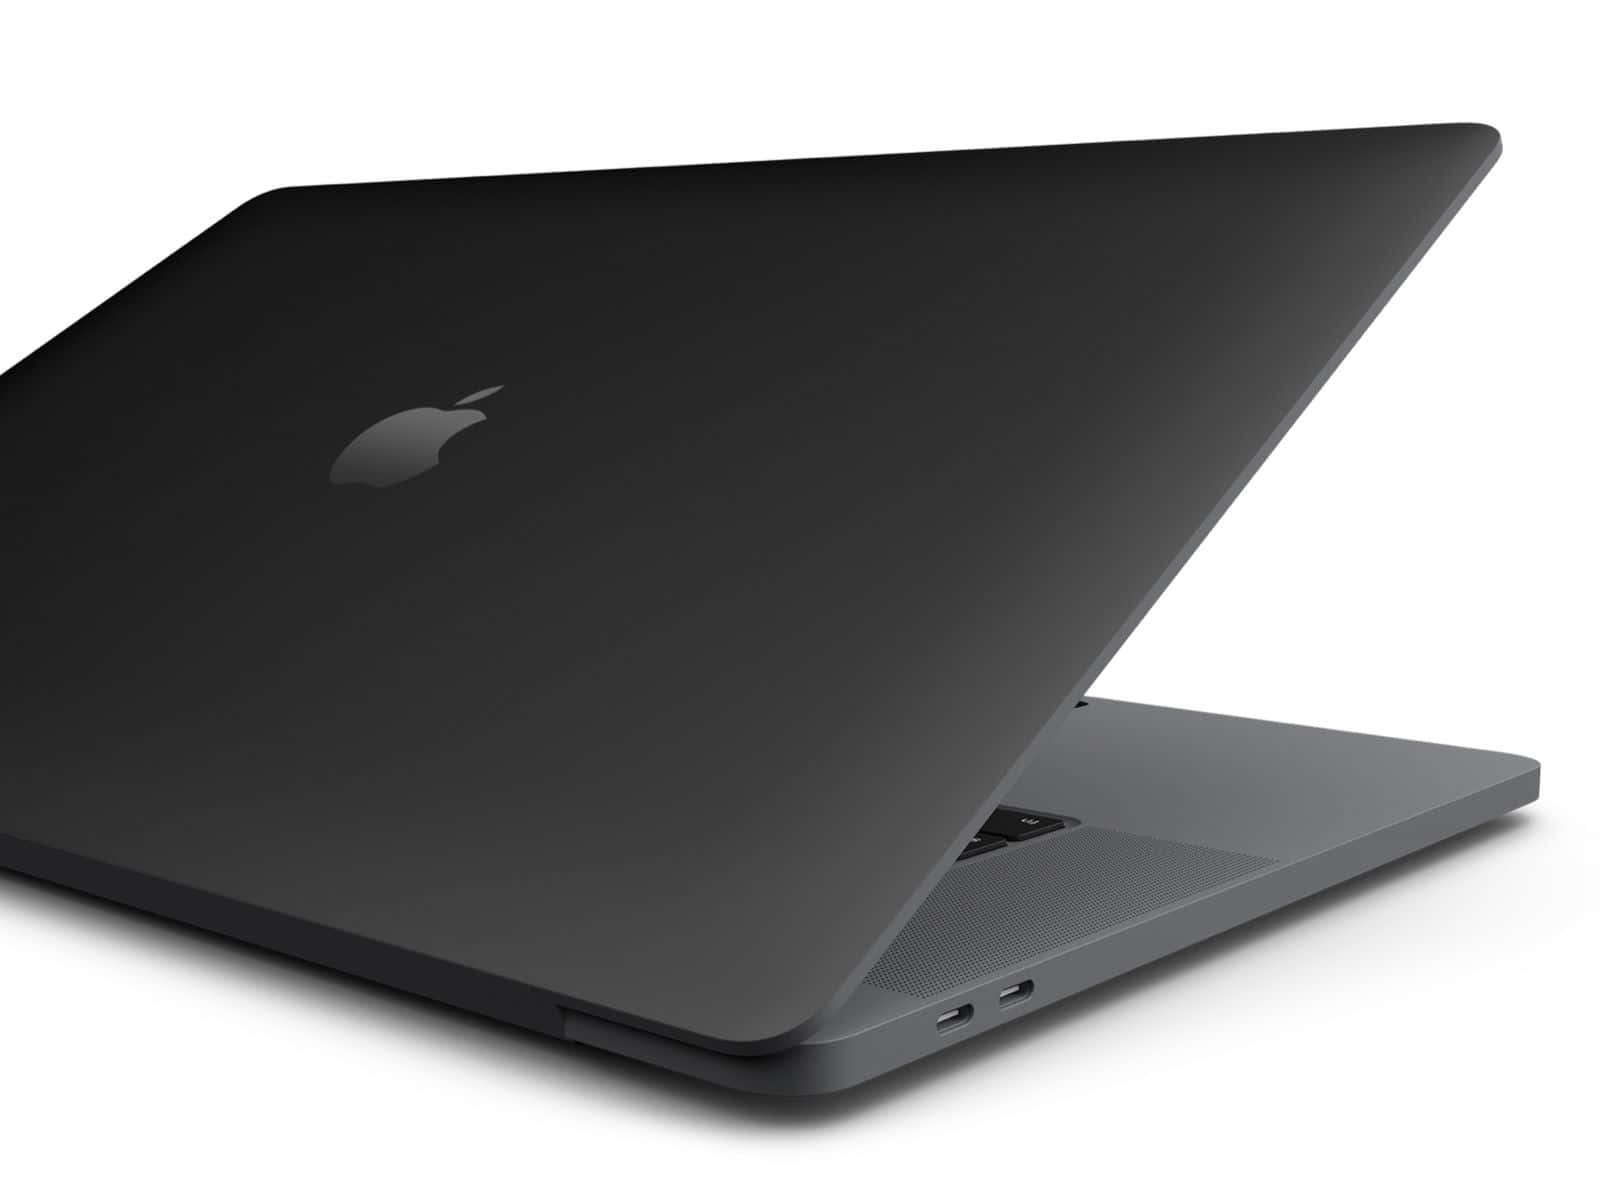 The sleek and stylish Black Macbook Wallpaper